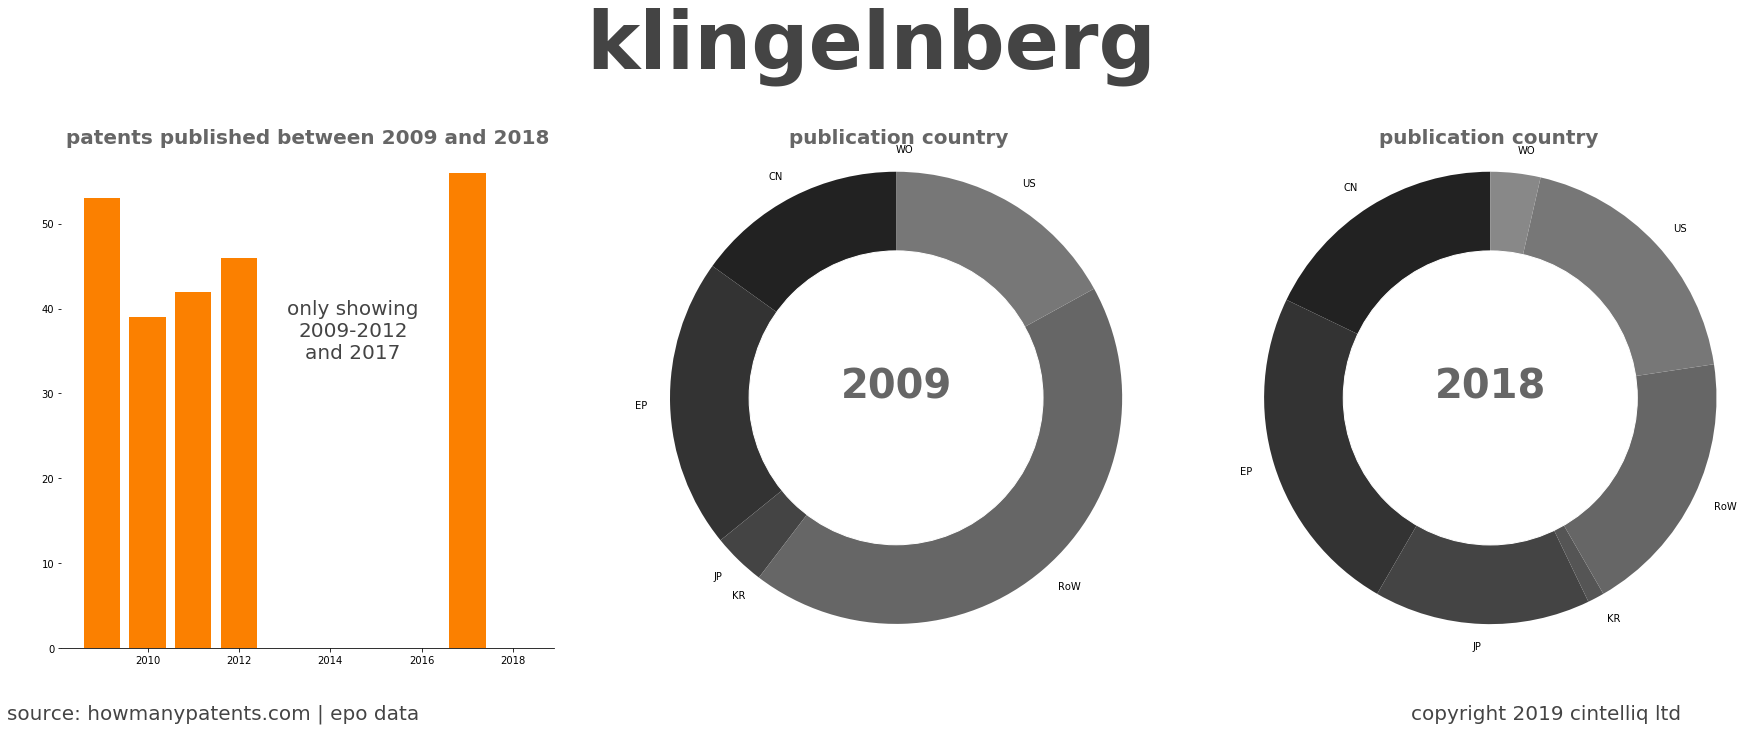 summary of patents for Klingelnberg